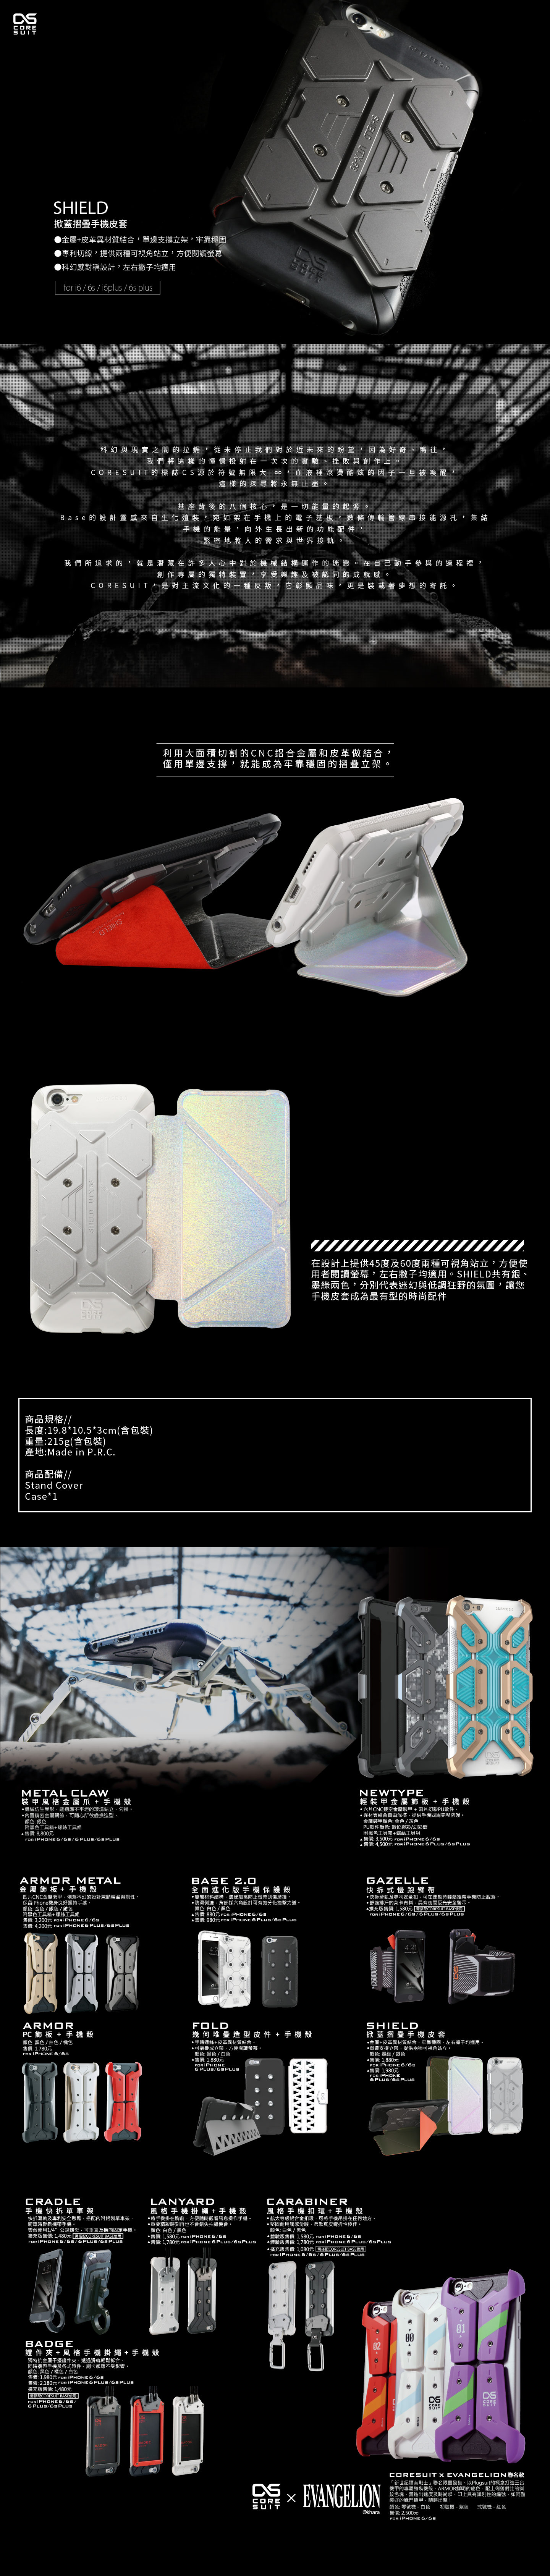 CORESUIT SHIELD掀蓋摺疊手機皮套 iPhone 6/6s 黑